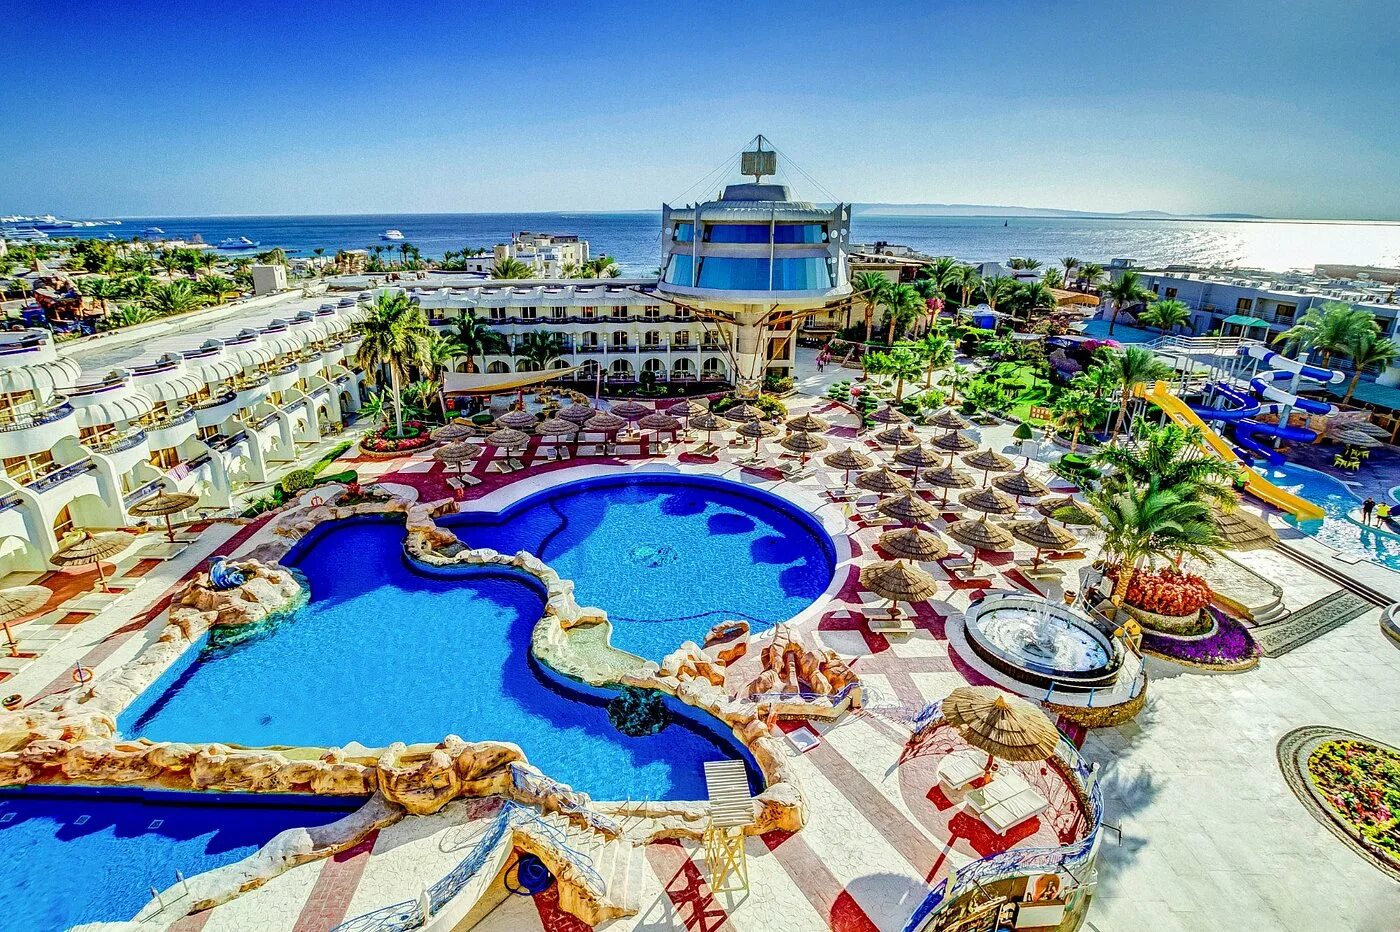 Sea Gull Resort Египет. Отель Сигал Бич Резорт Хургада. Отель Seagull Beach Resort 4*. Seagull Beach Resort Hurghada 4 ****, Египет, Хургада.